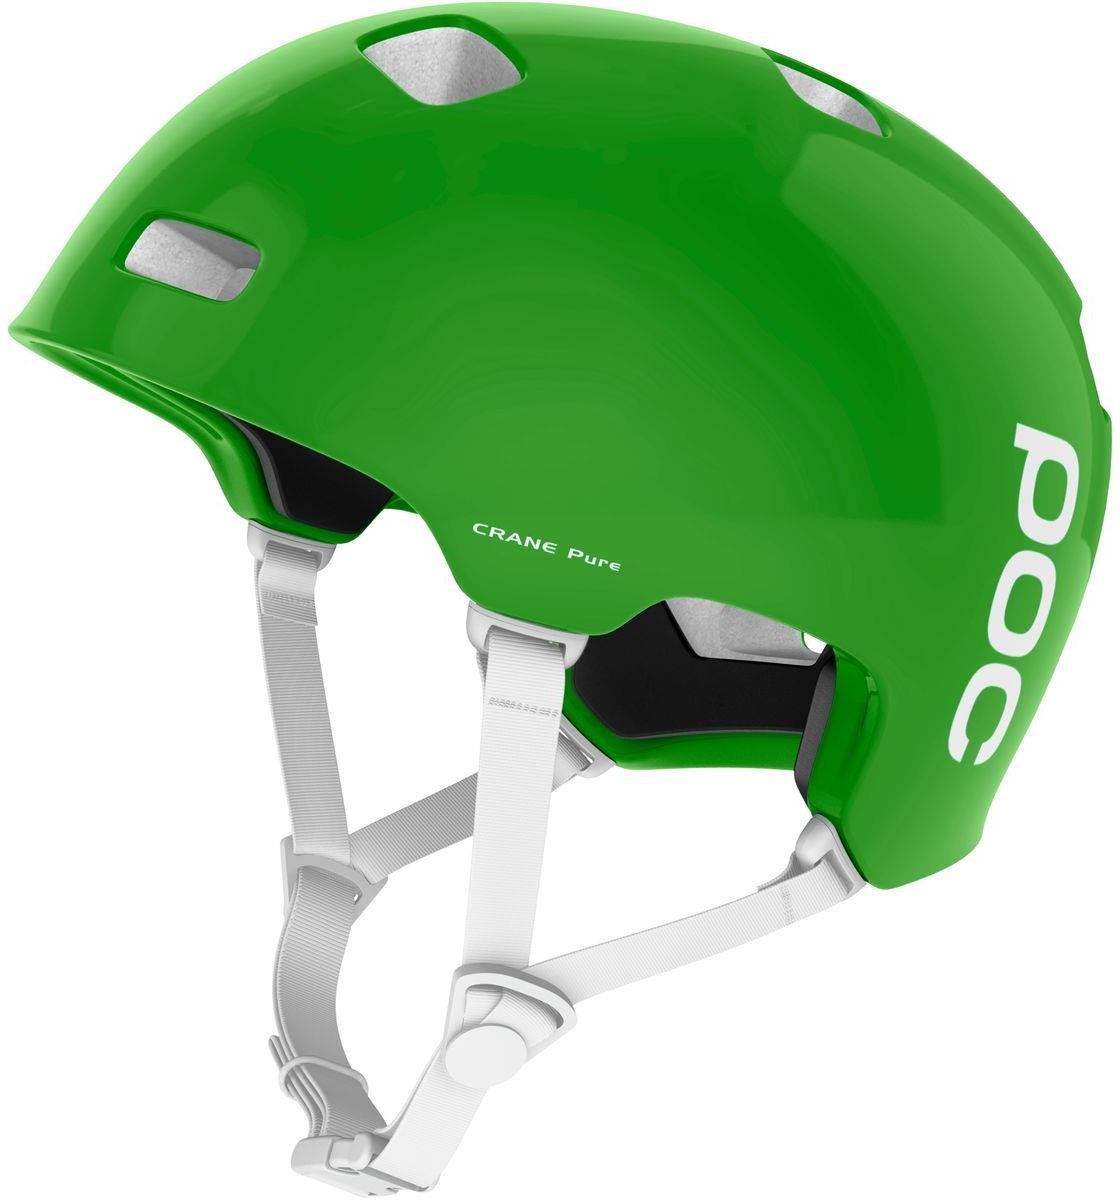 POC Crane Pure Skate / BMX Cycling Helmet product image